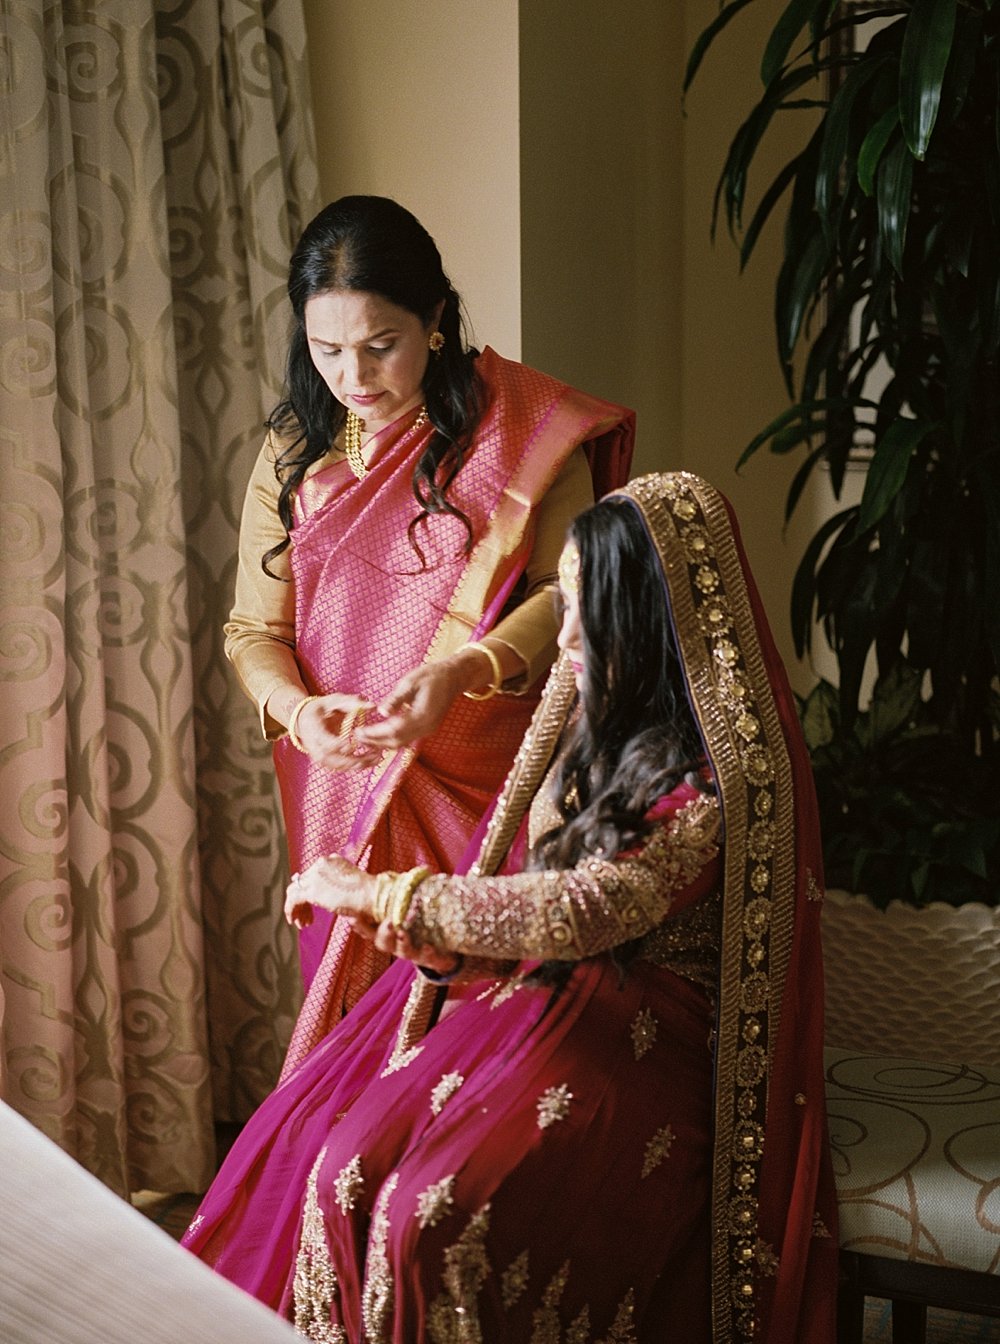  Indian Wedding Hilton Bonnet Creek Waldorf Astoria Orlando FL - Photovision Prints - Film Photography | Ashley Holstein Photography